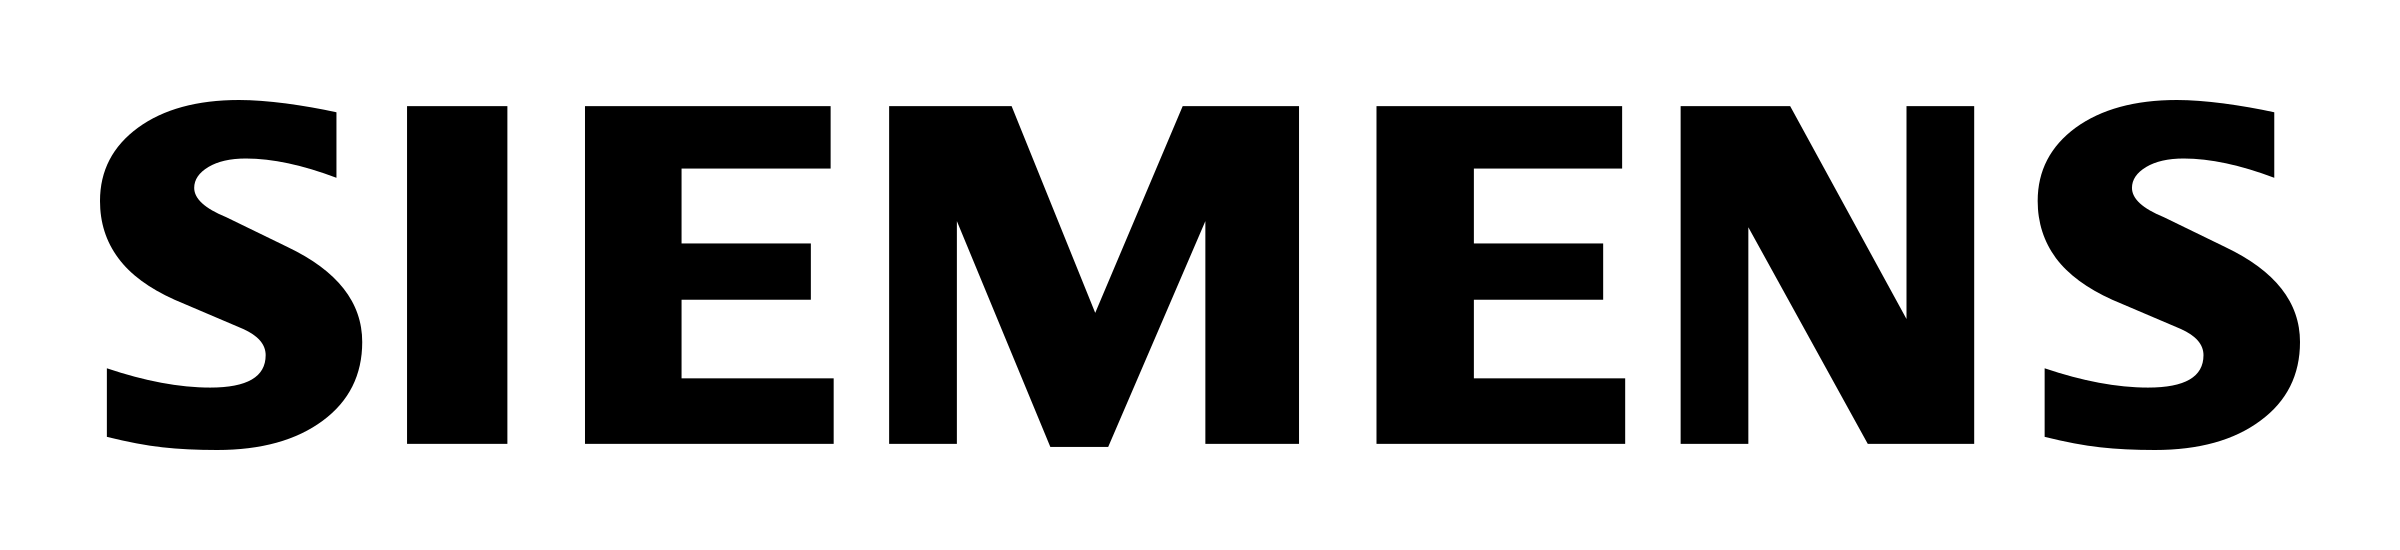 siemens-logo-black-and-white